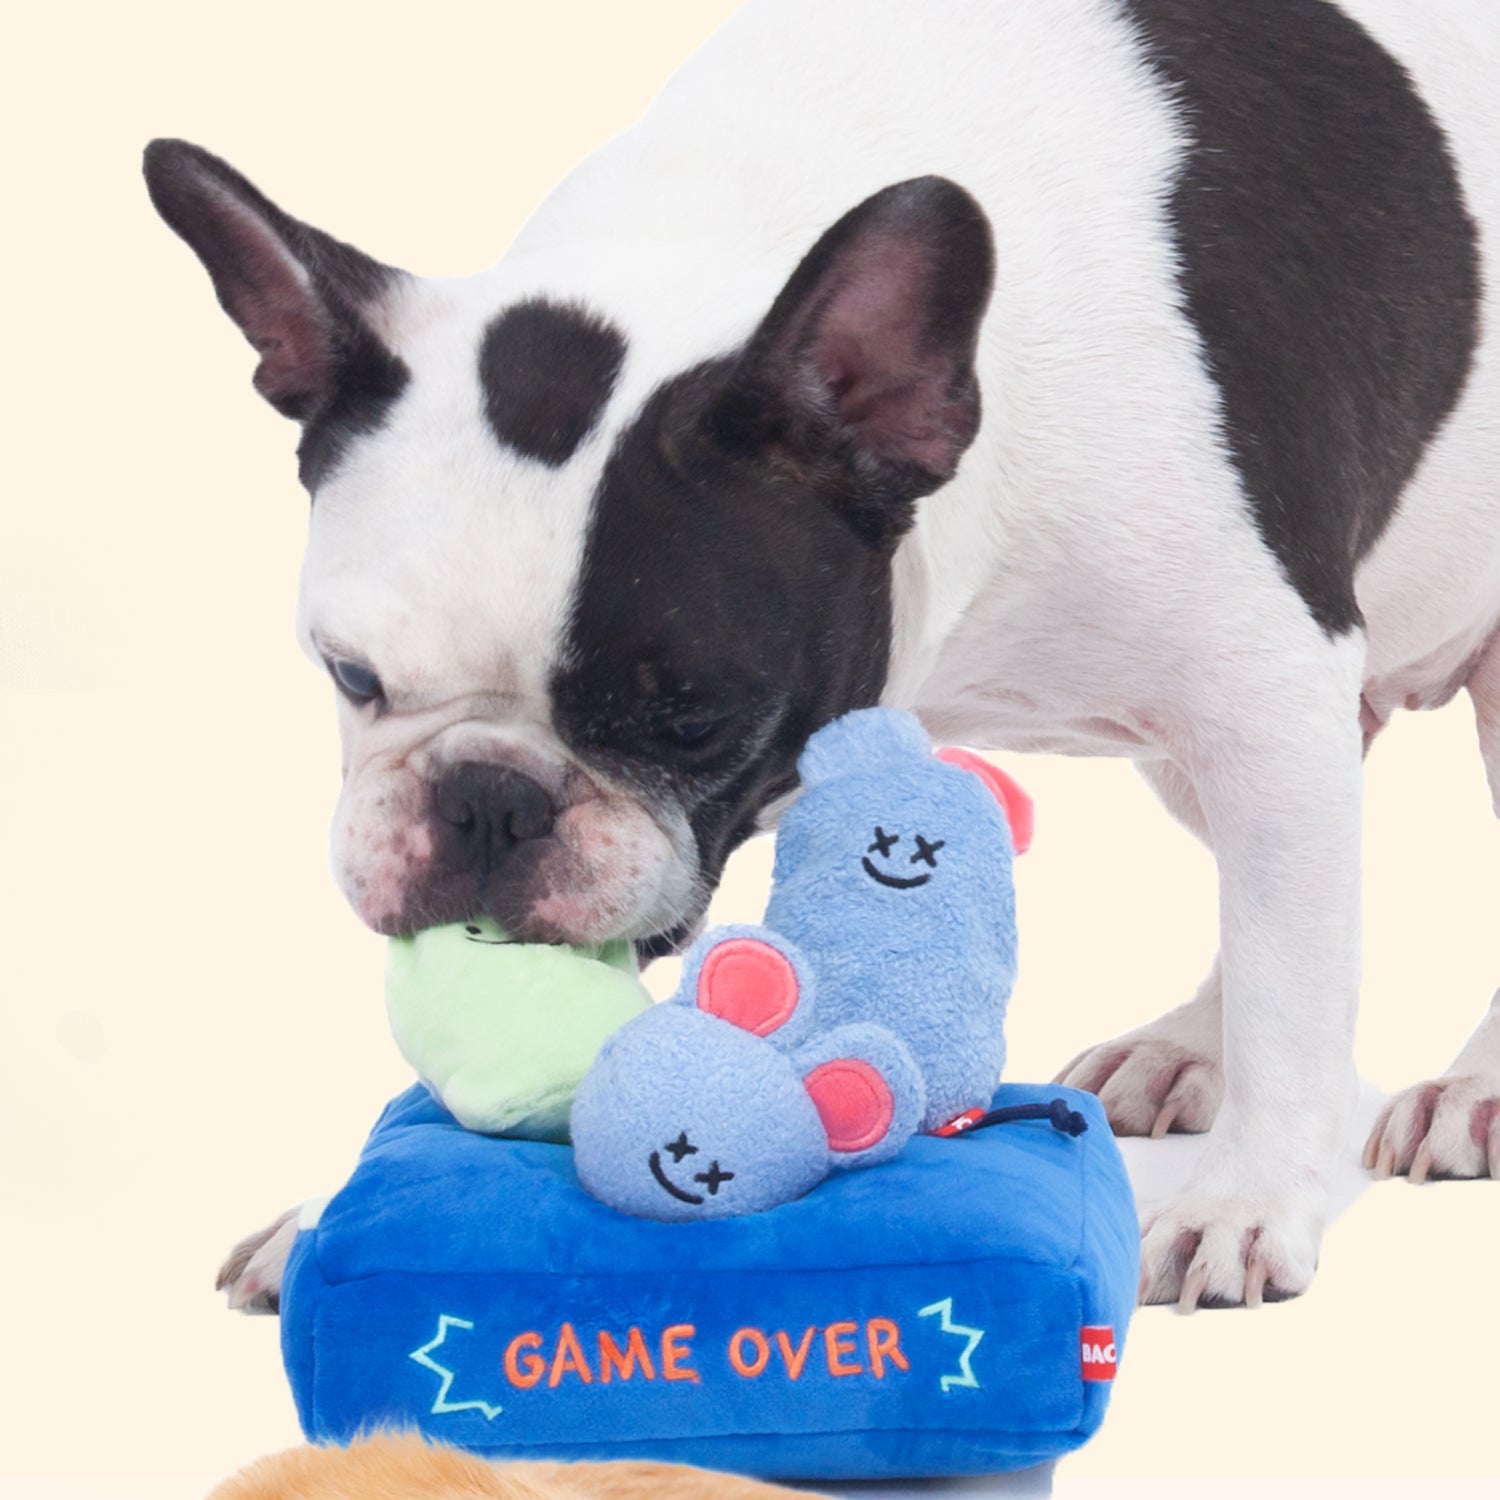 Pet Supplies : HST Interactive Dog Toy - Home Dog Toy, Treat